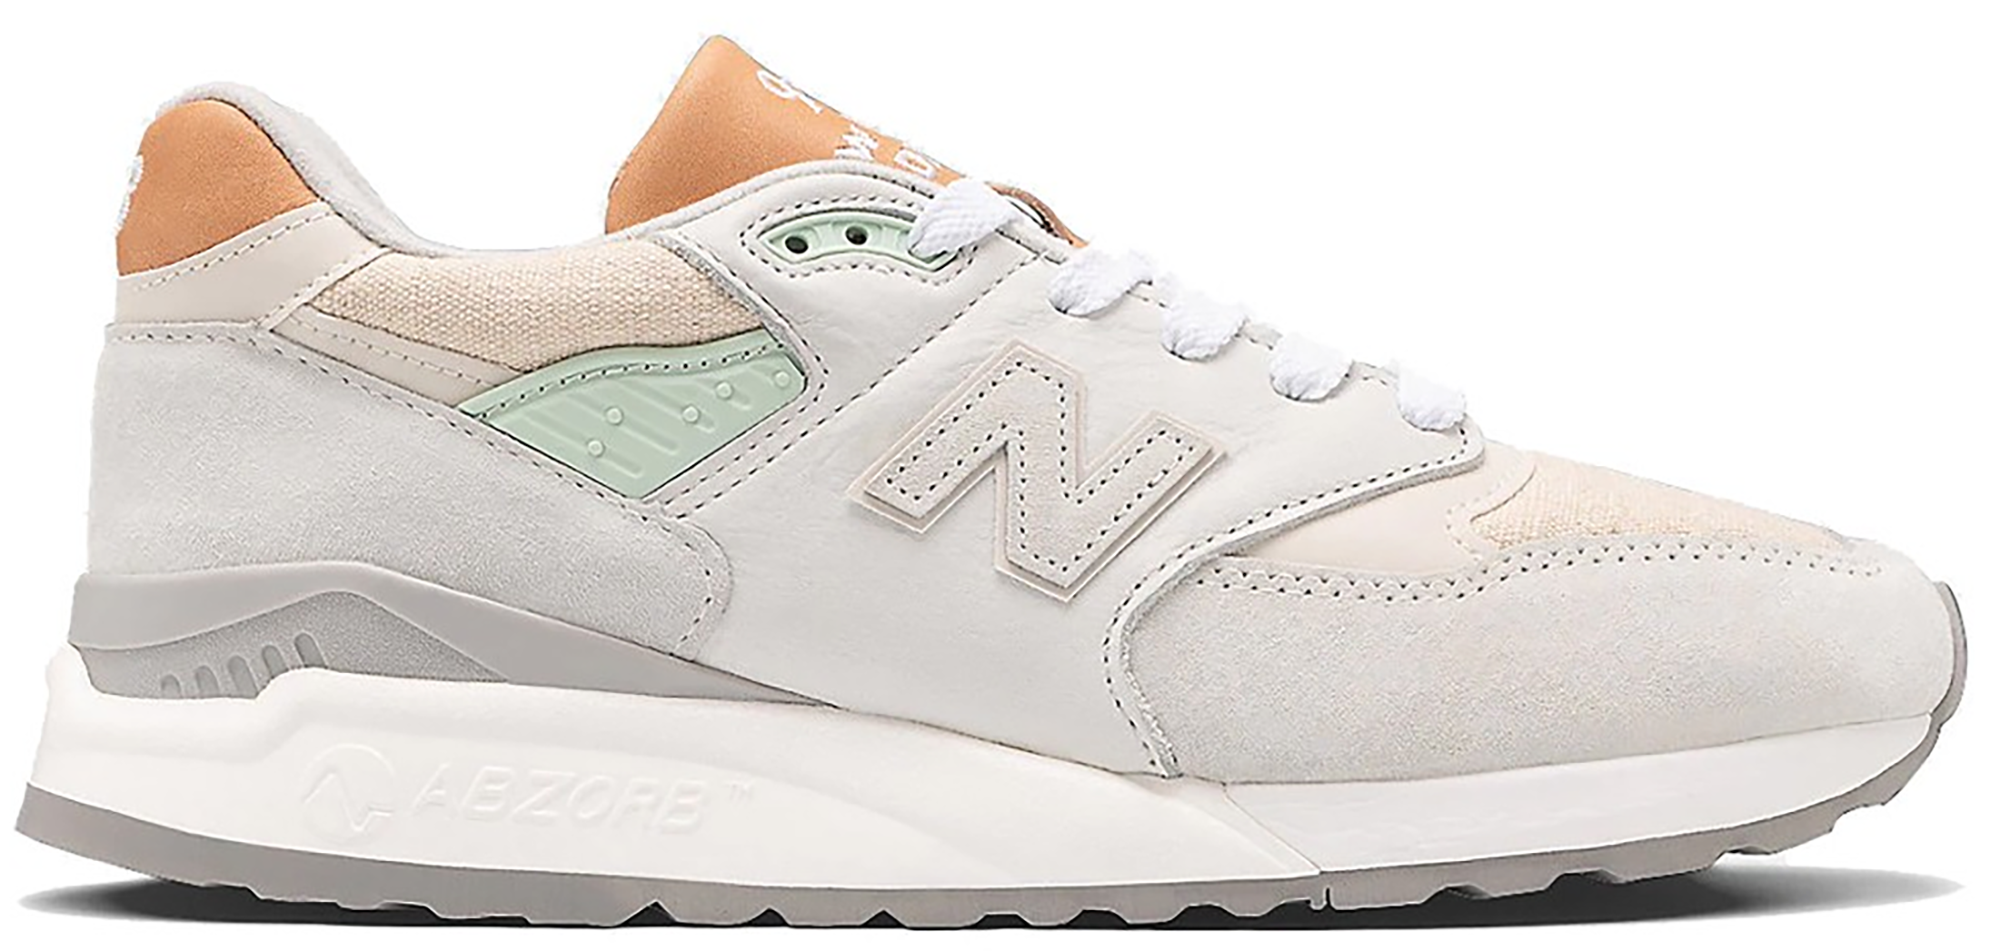 New Balance 998 White Tan - Sneakers